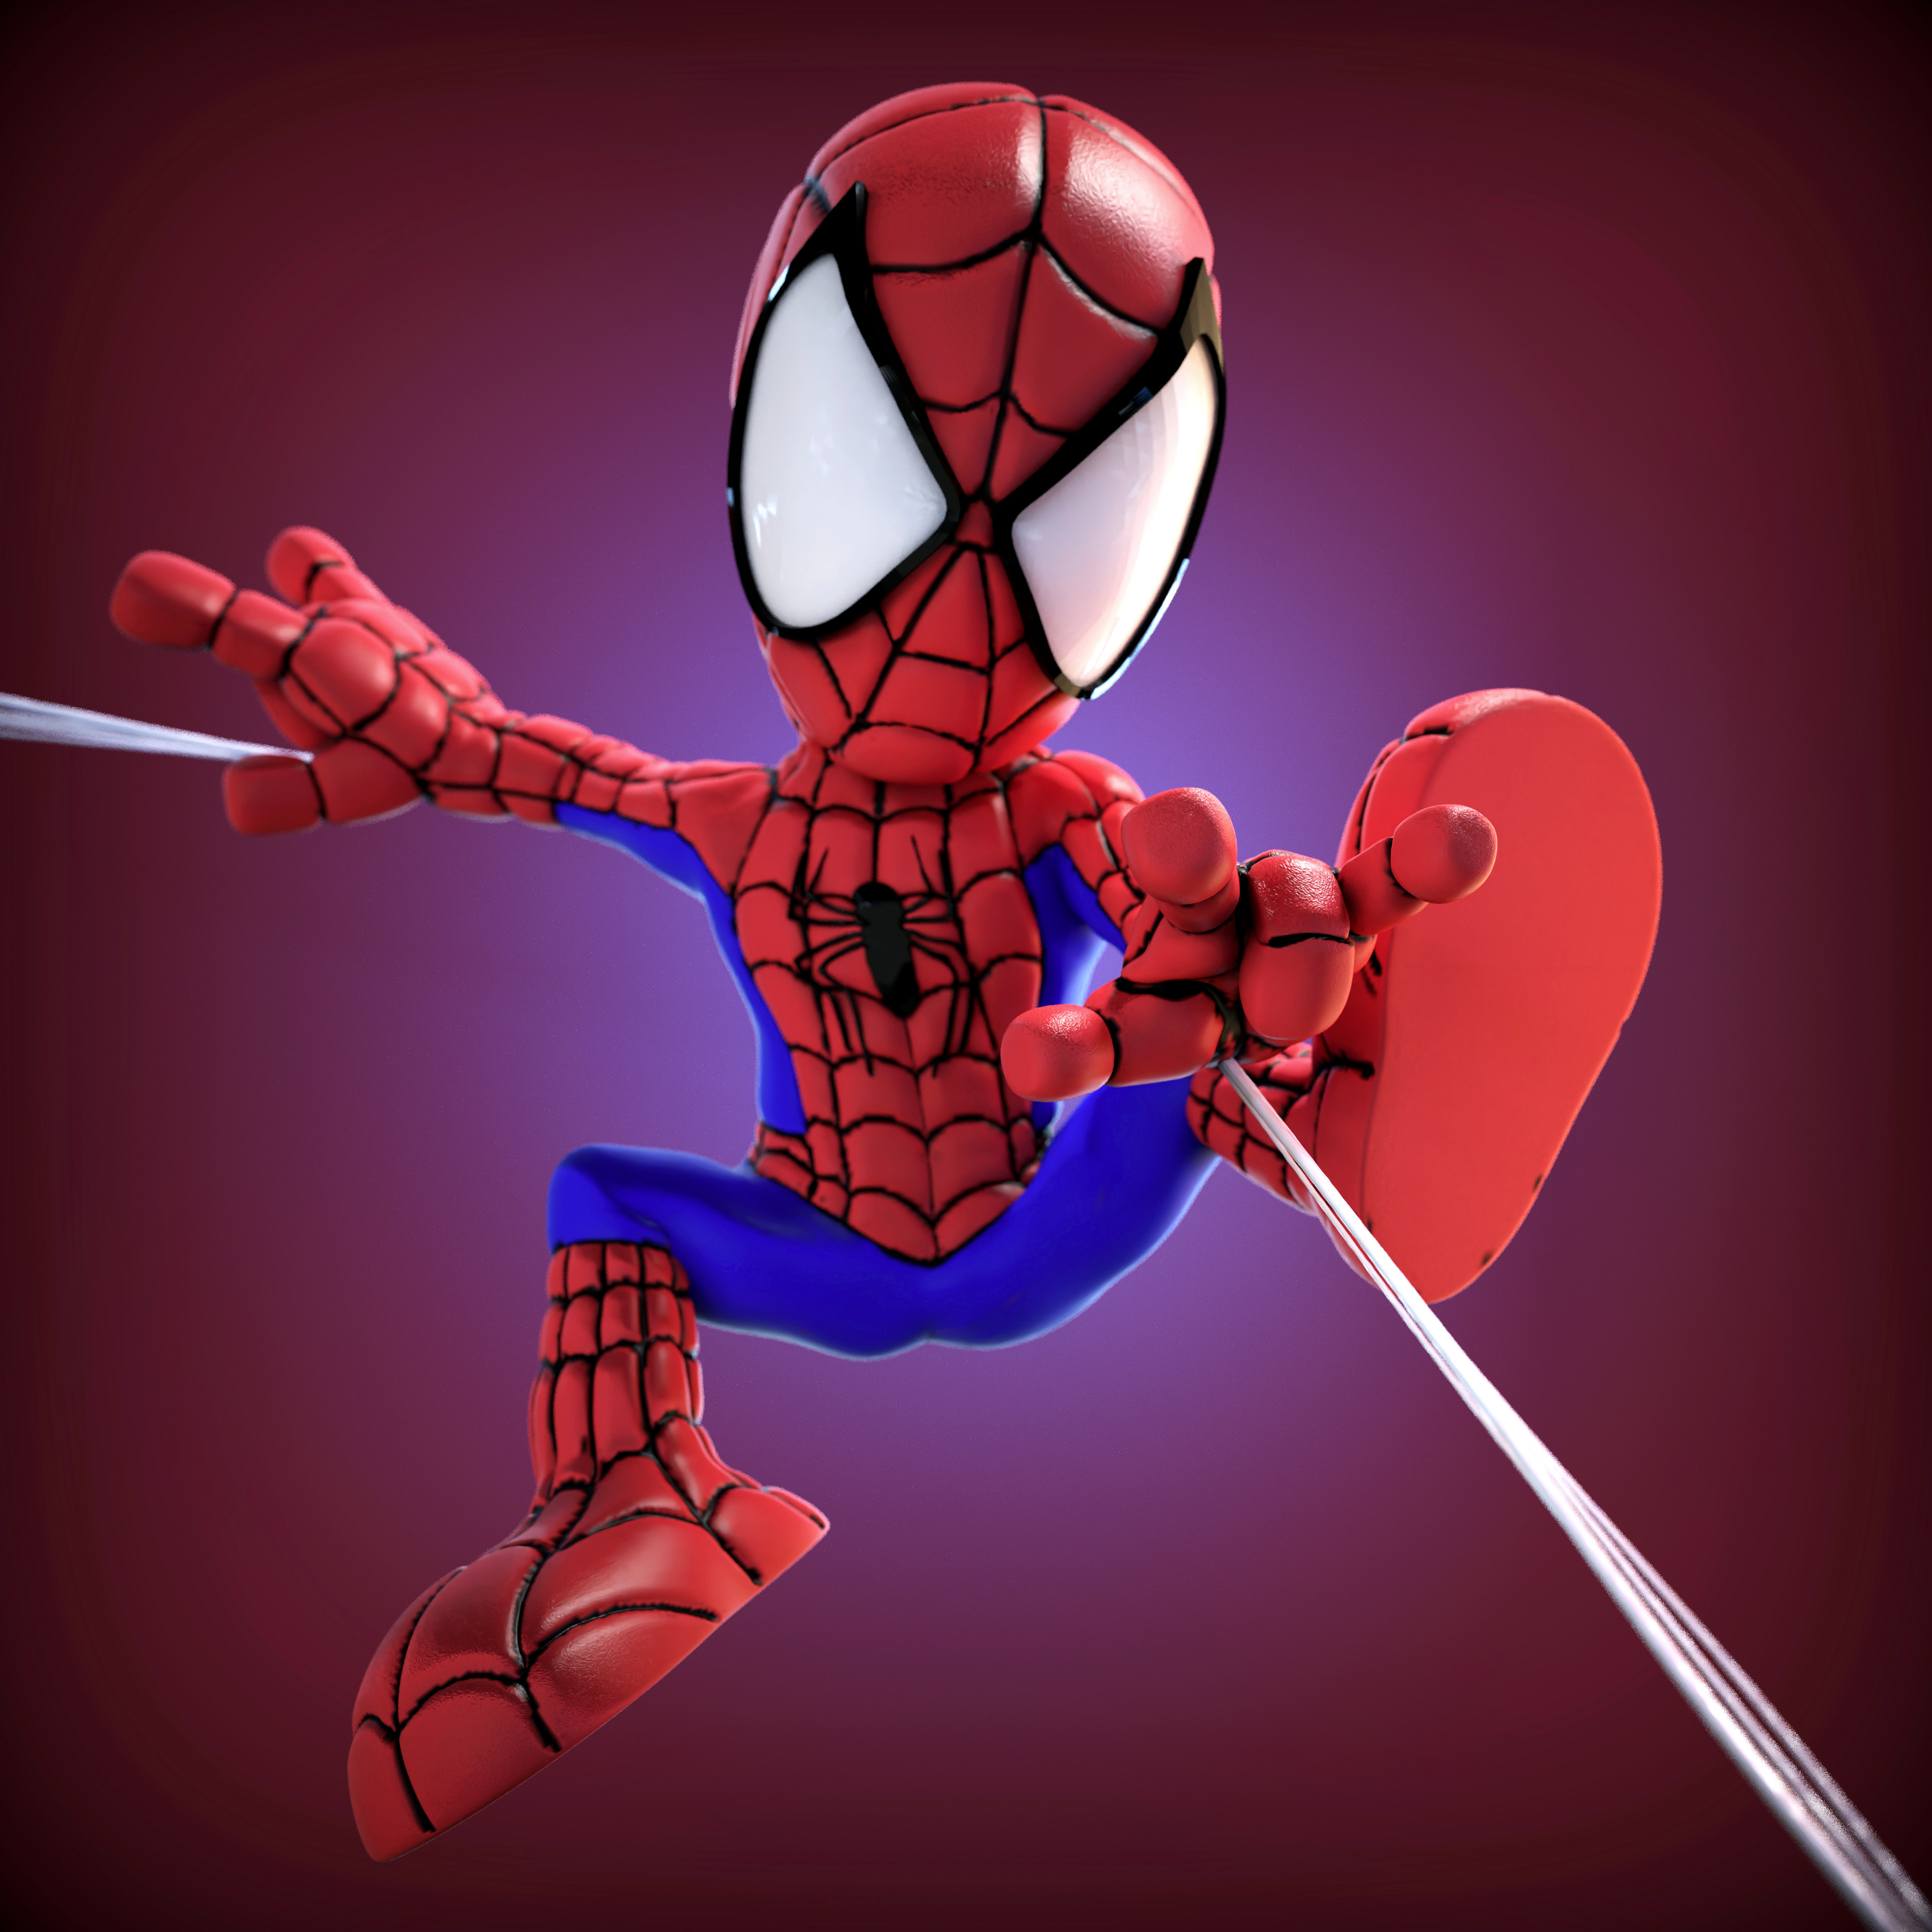 Artstation - Chibi-Style Spider-Man